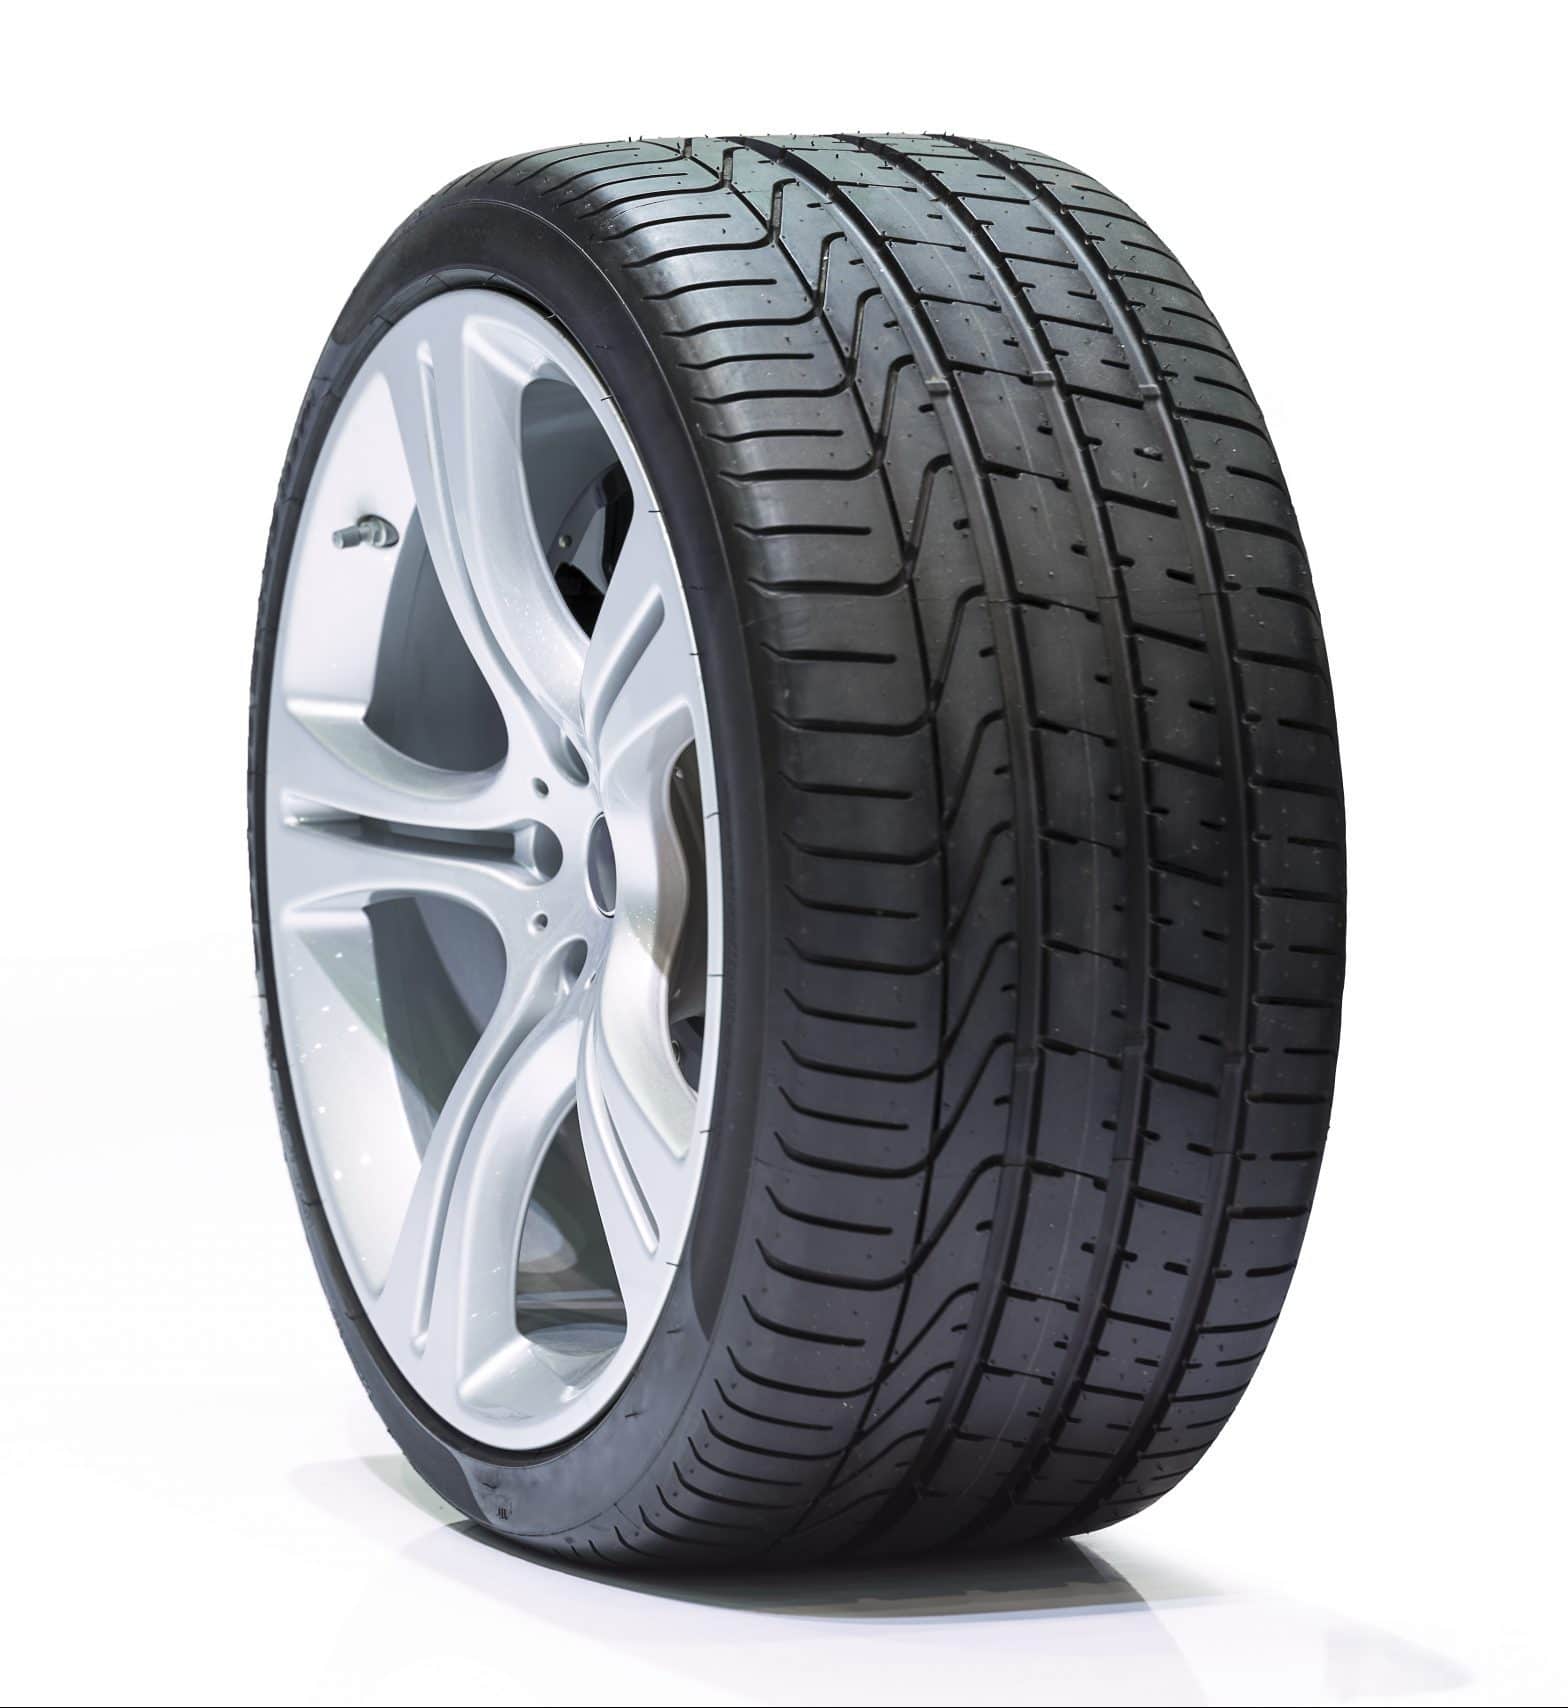 Flat Tires, Roadside Assistance, Eemerg mobile app, Car Trouble, Mobile Tire Change